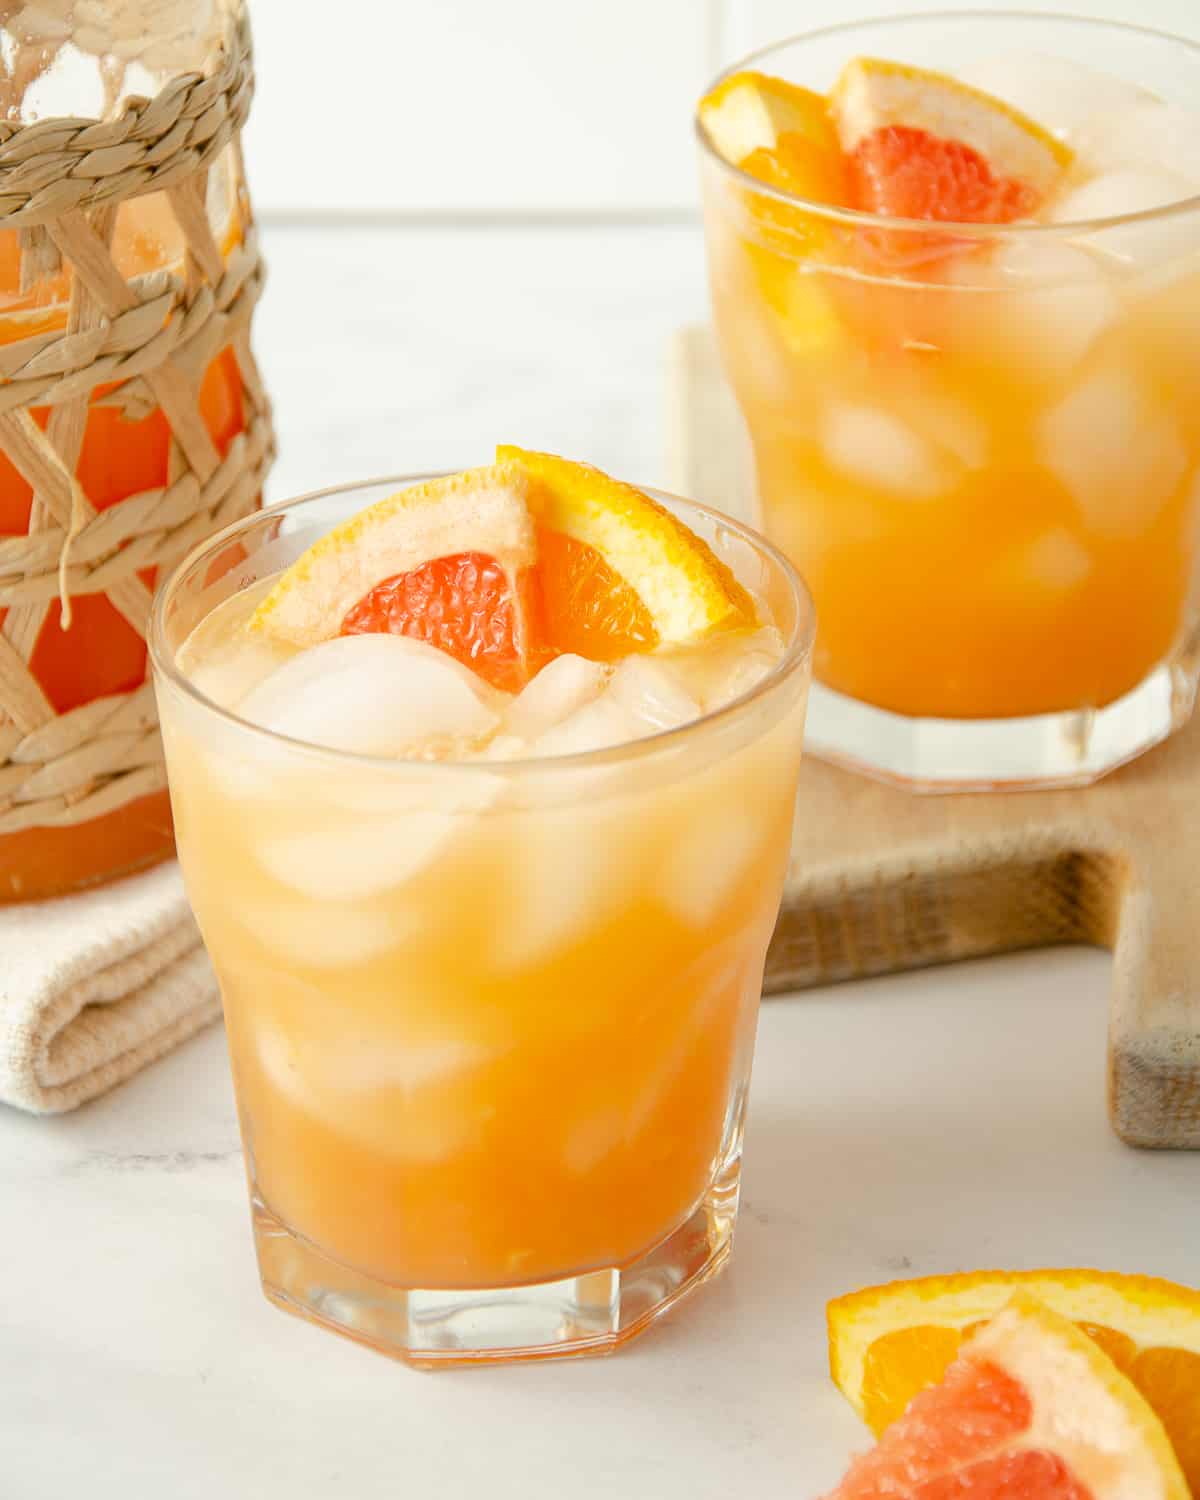 Two glasses of orange and grapefruit juice with orange slices.